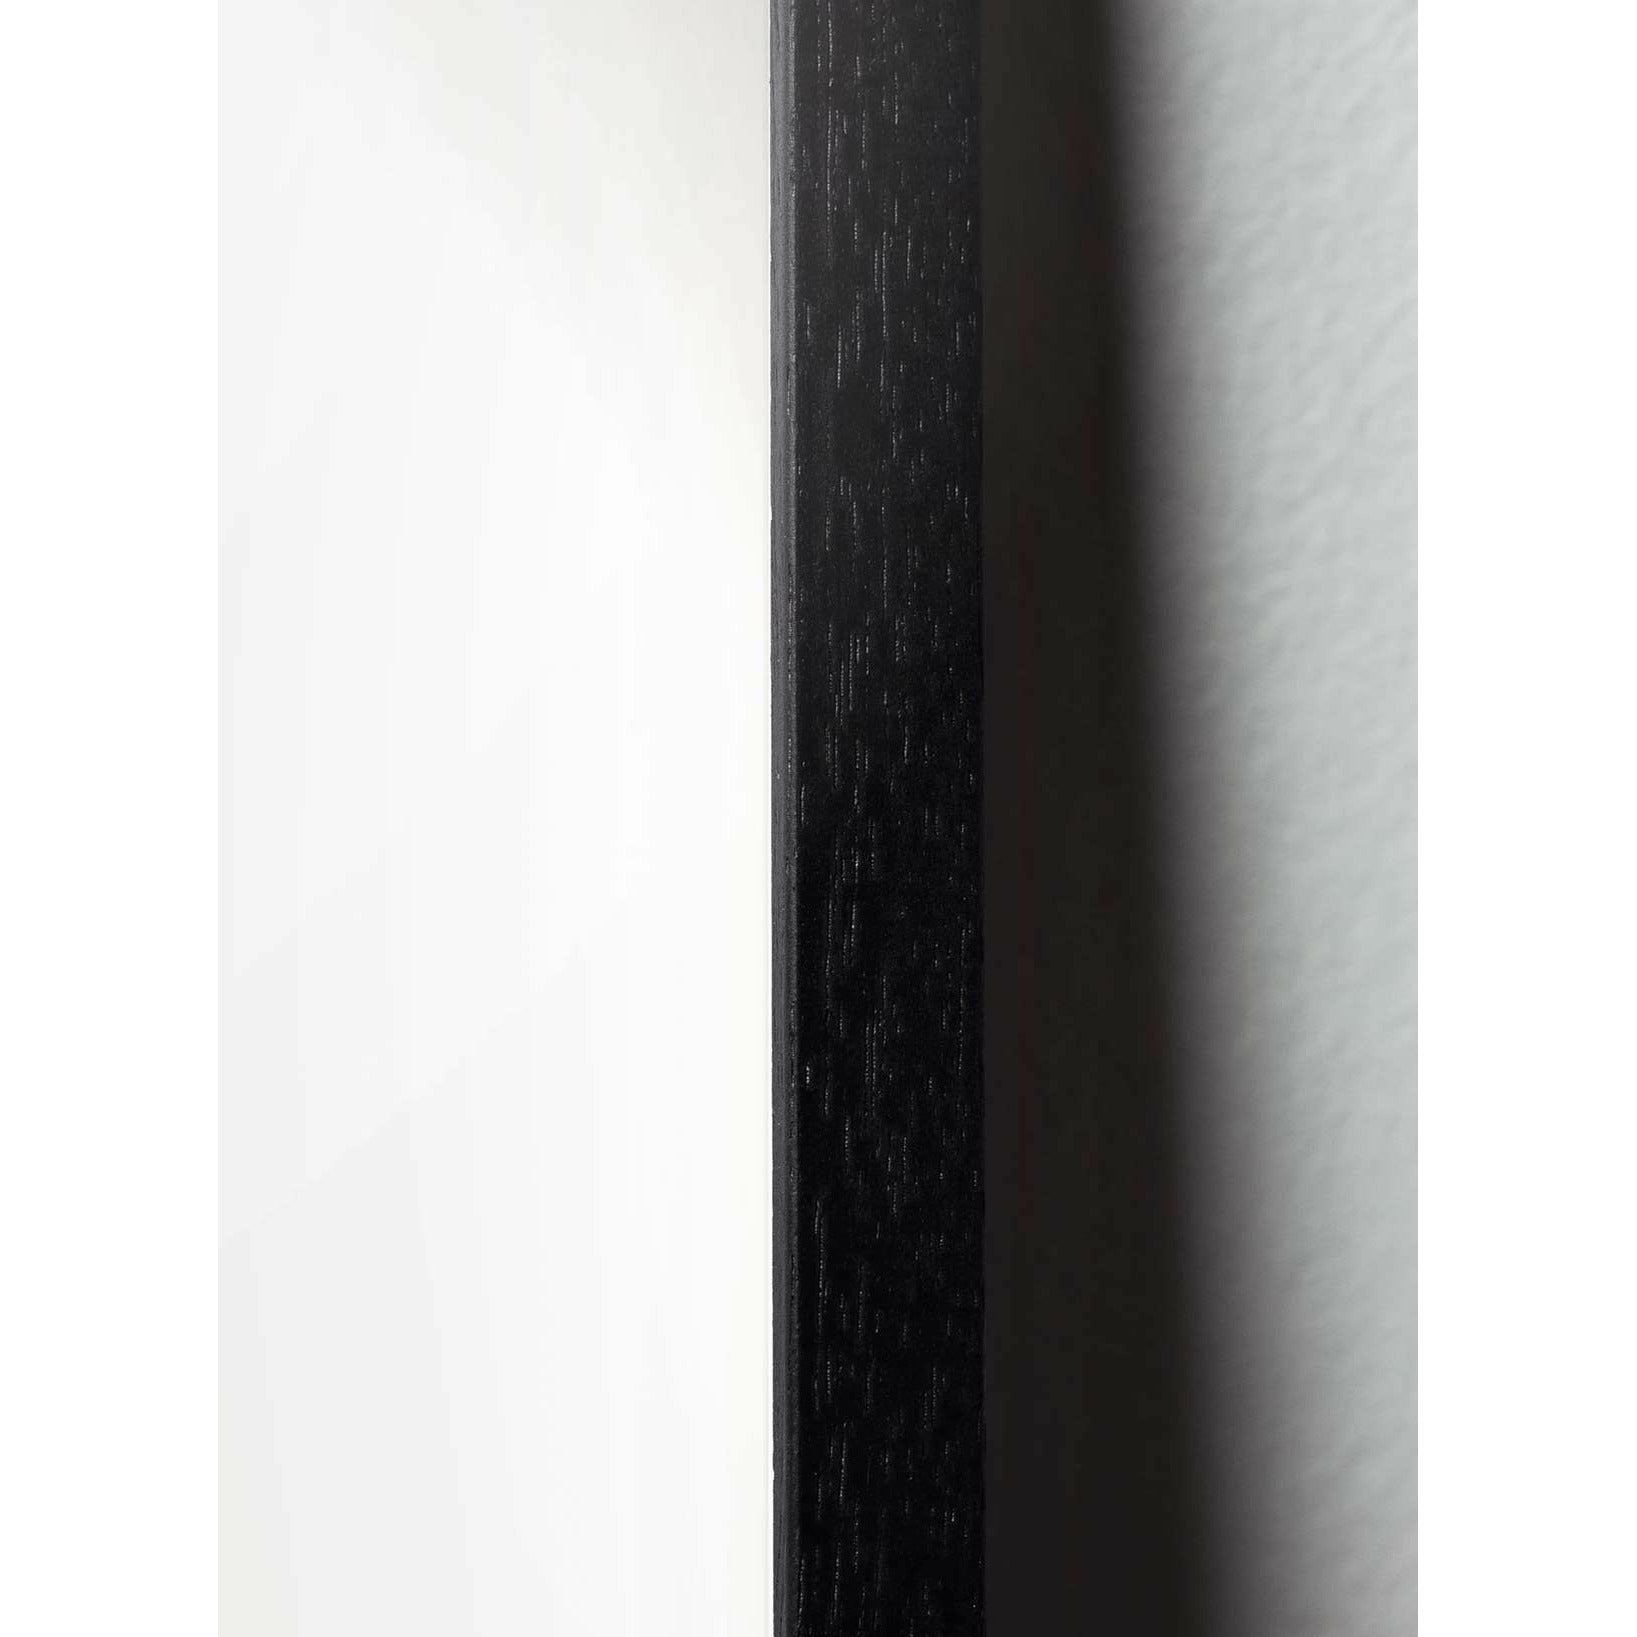 Póster clásico de cono de pino de creación, marco en madera lacada en negro 70x100 cm, fondo de color arena